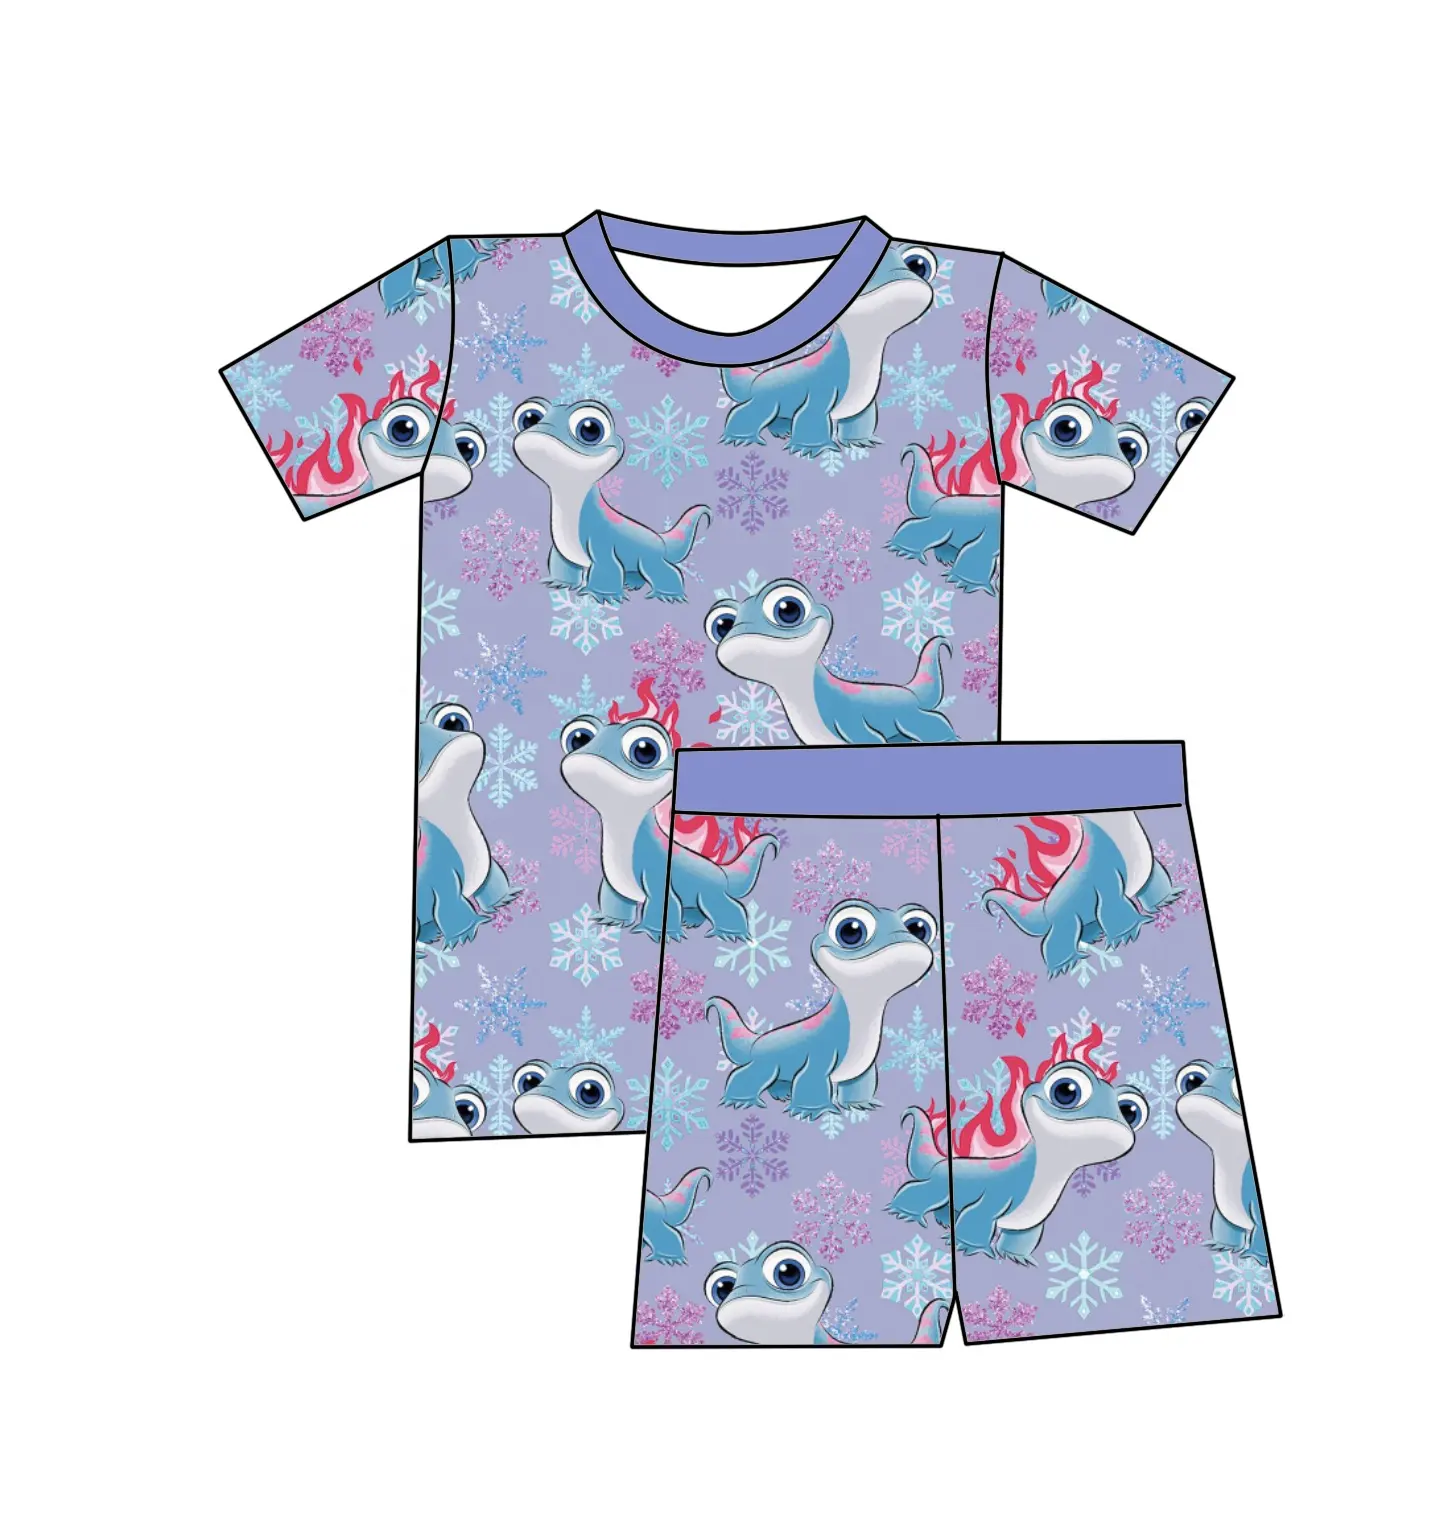 Liangzhe camiseta競争力のある価格新しい印刷男の子女の子スーツセットソフトバンブーベビーパジャマセット